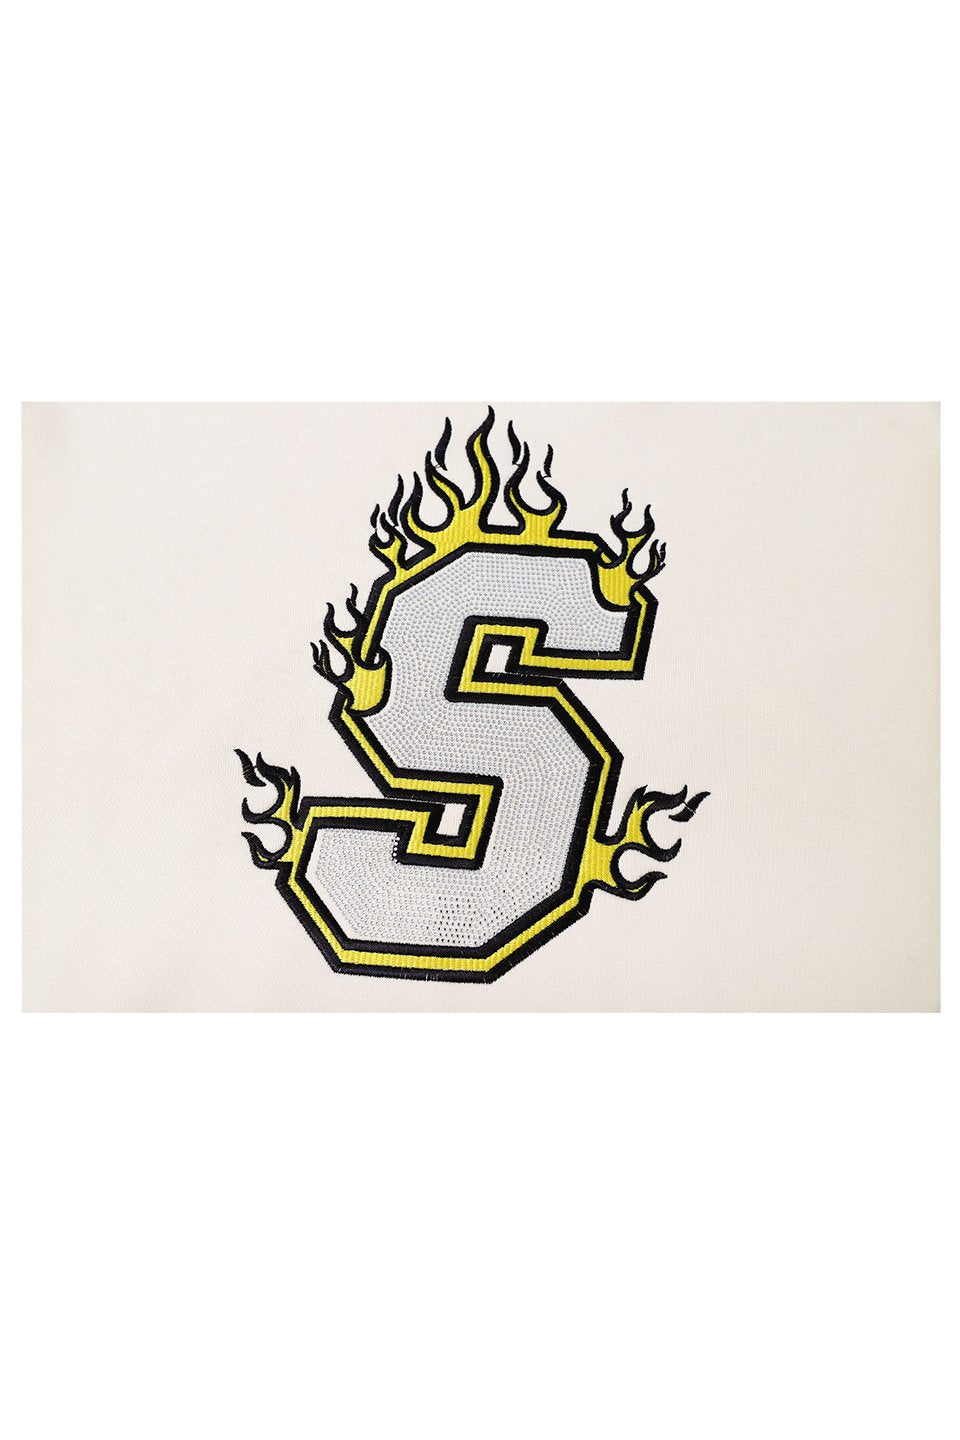 Supplier : Fire Logo Hoodie White